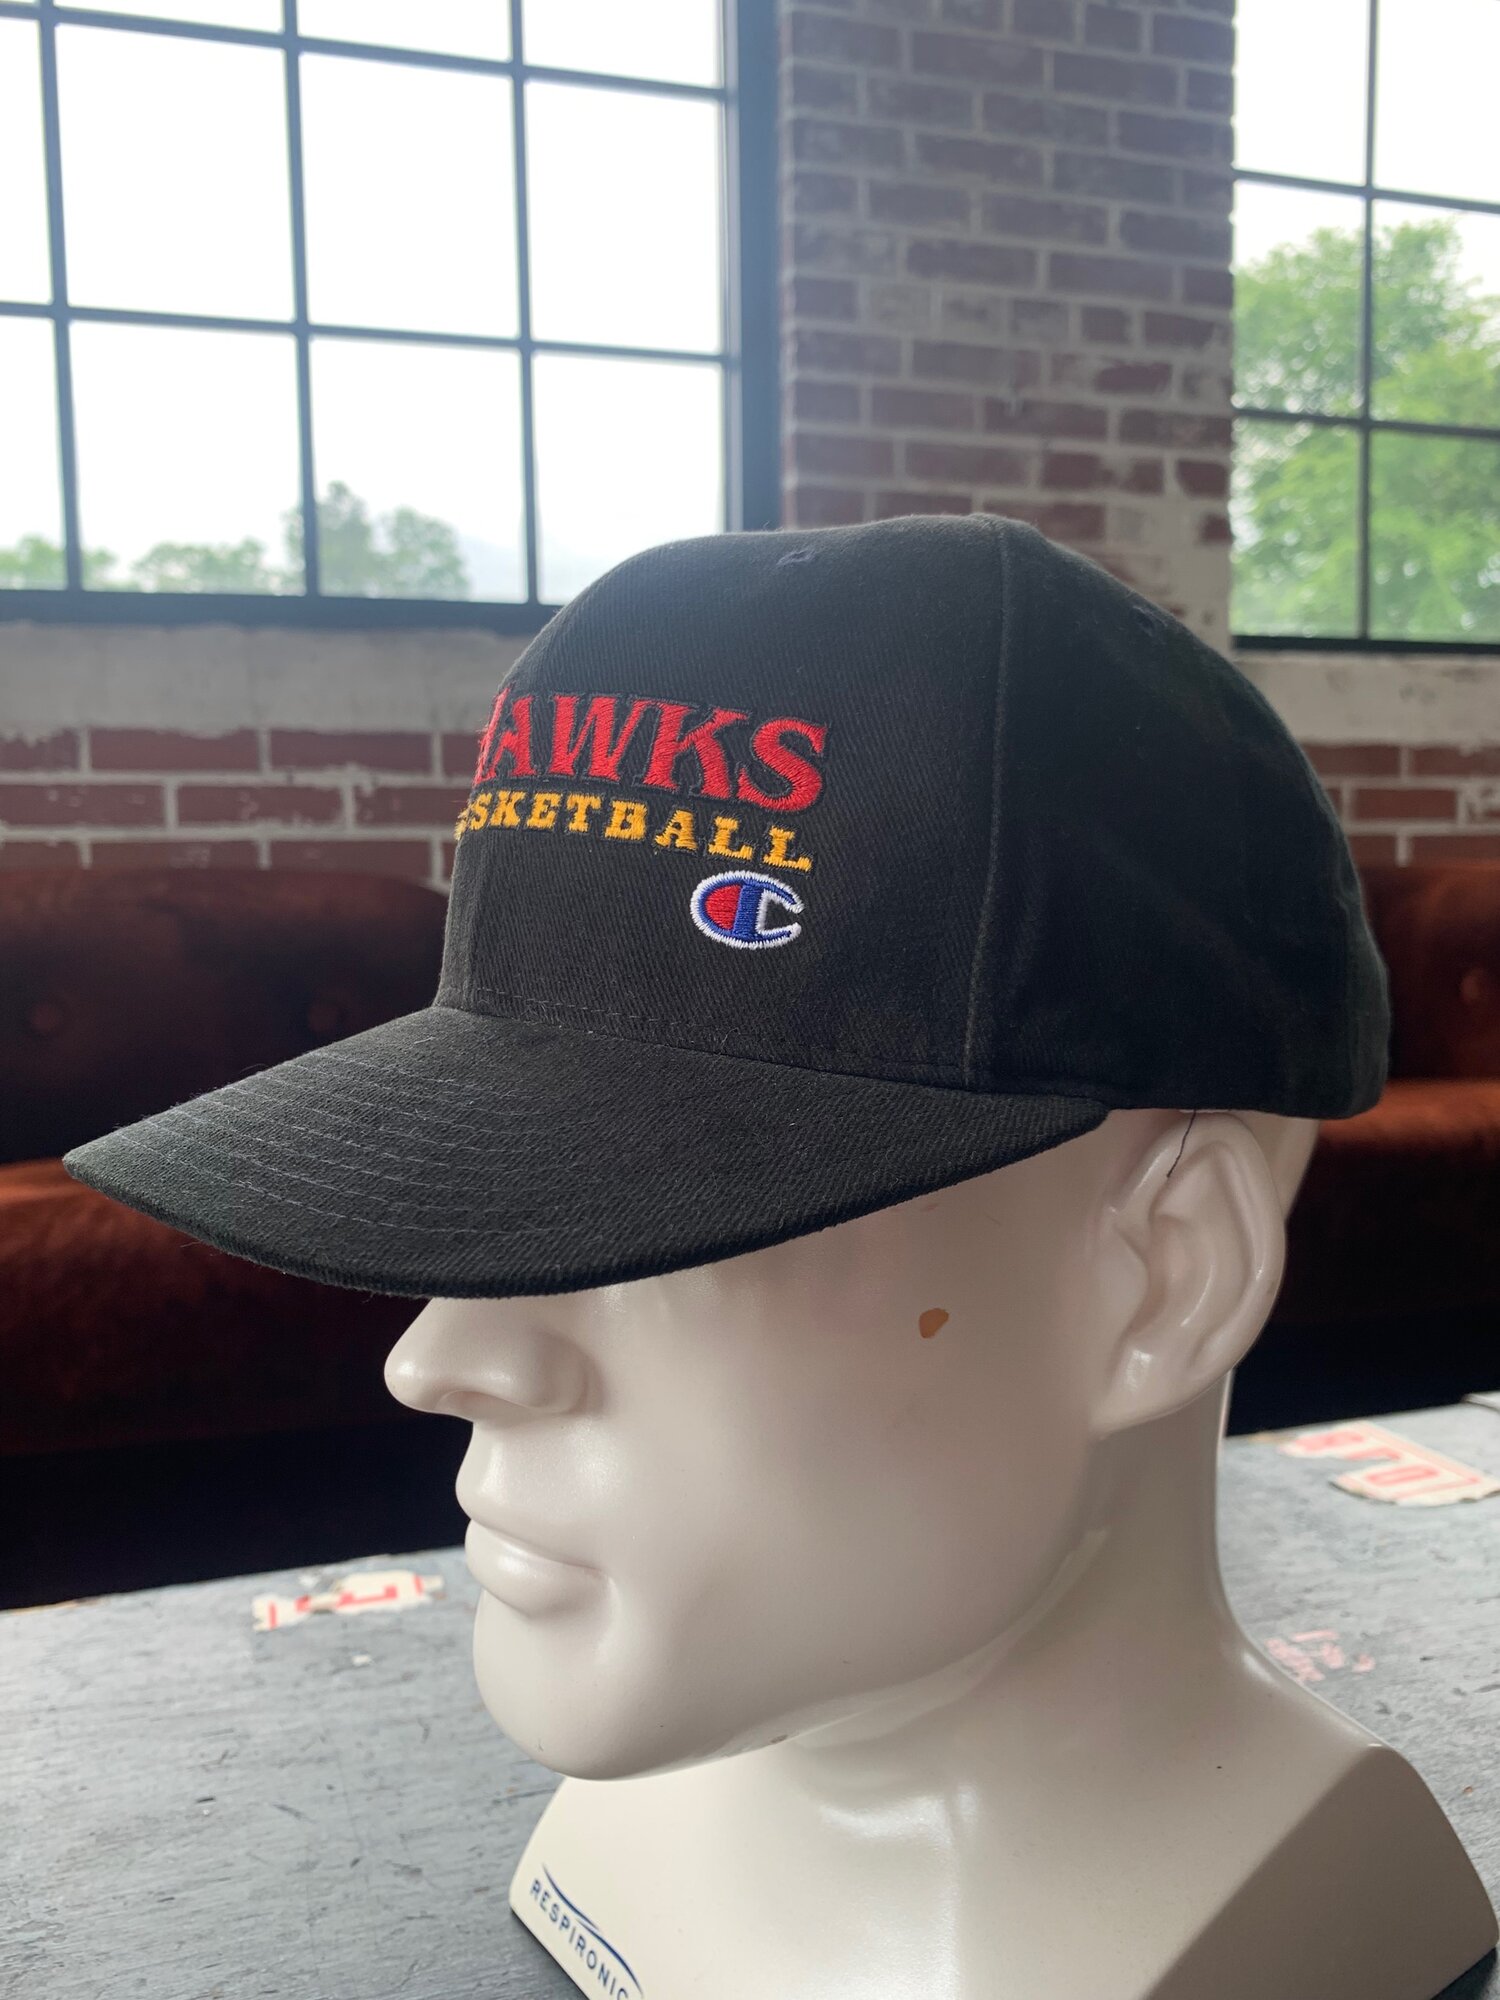 Vintage Atlanta Hawks Pacman Logo Red Snapback Hat by TWINS 90's RARE Cap